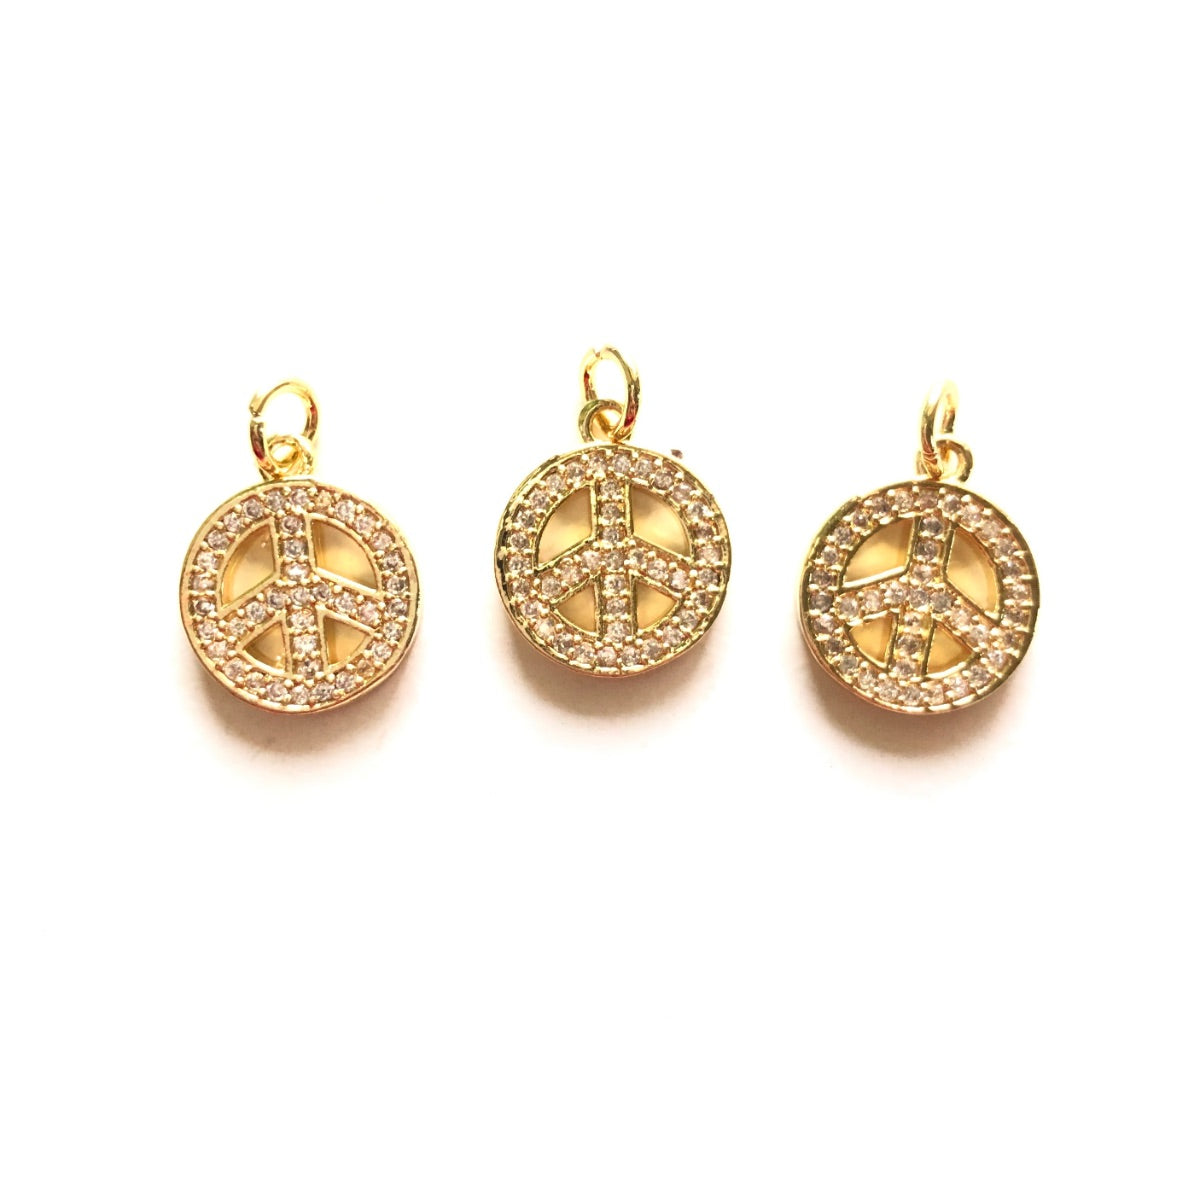 10pcs/lot 12.5mm Small Size CZ Paved Peace Sign Charms Gold CZ Paved Charms Small Sizes Symbols Charms Beads Beyond